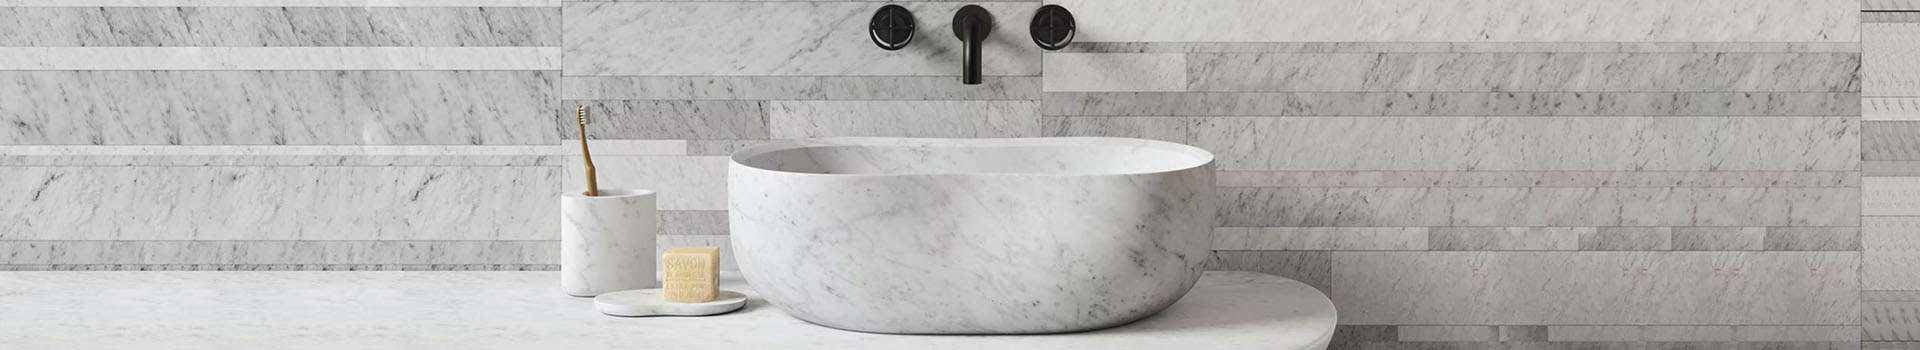 Italy Statuario White Marble Countertop Sink